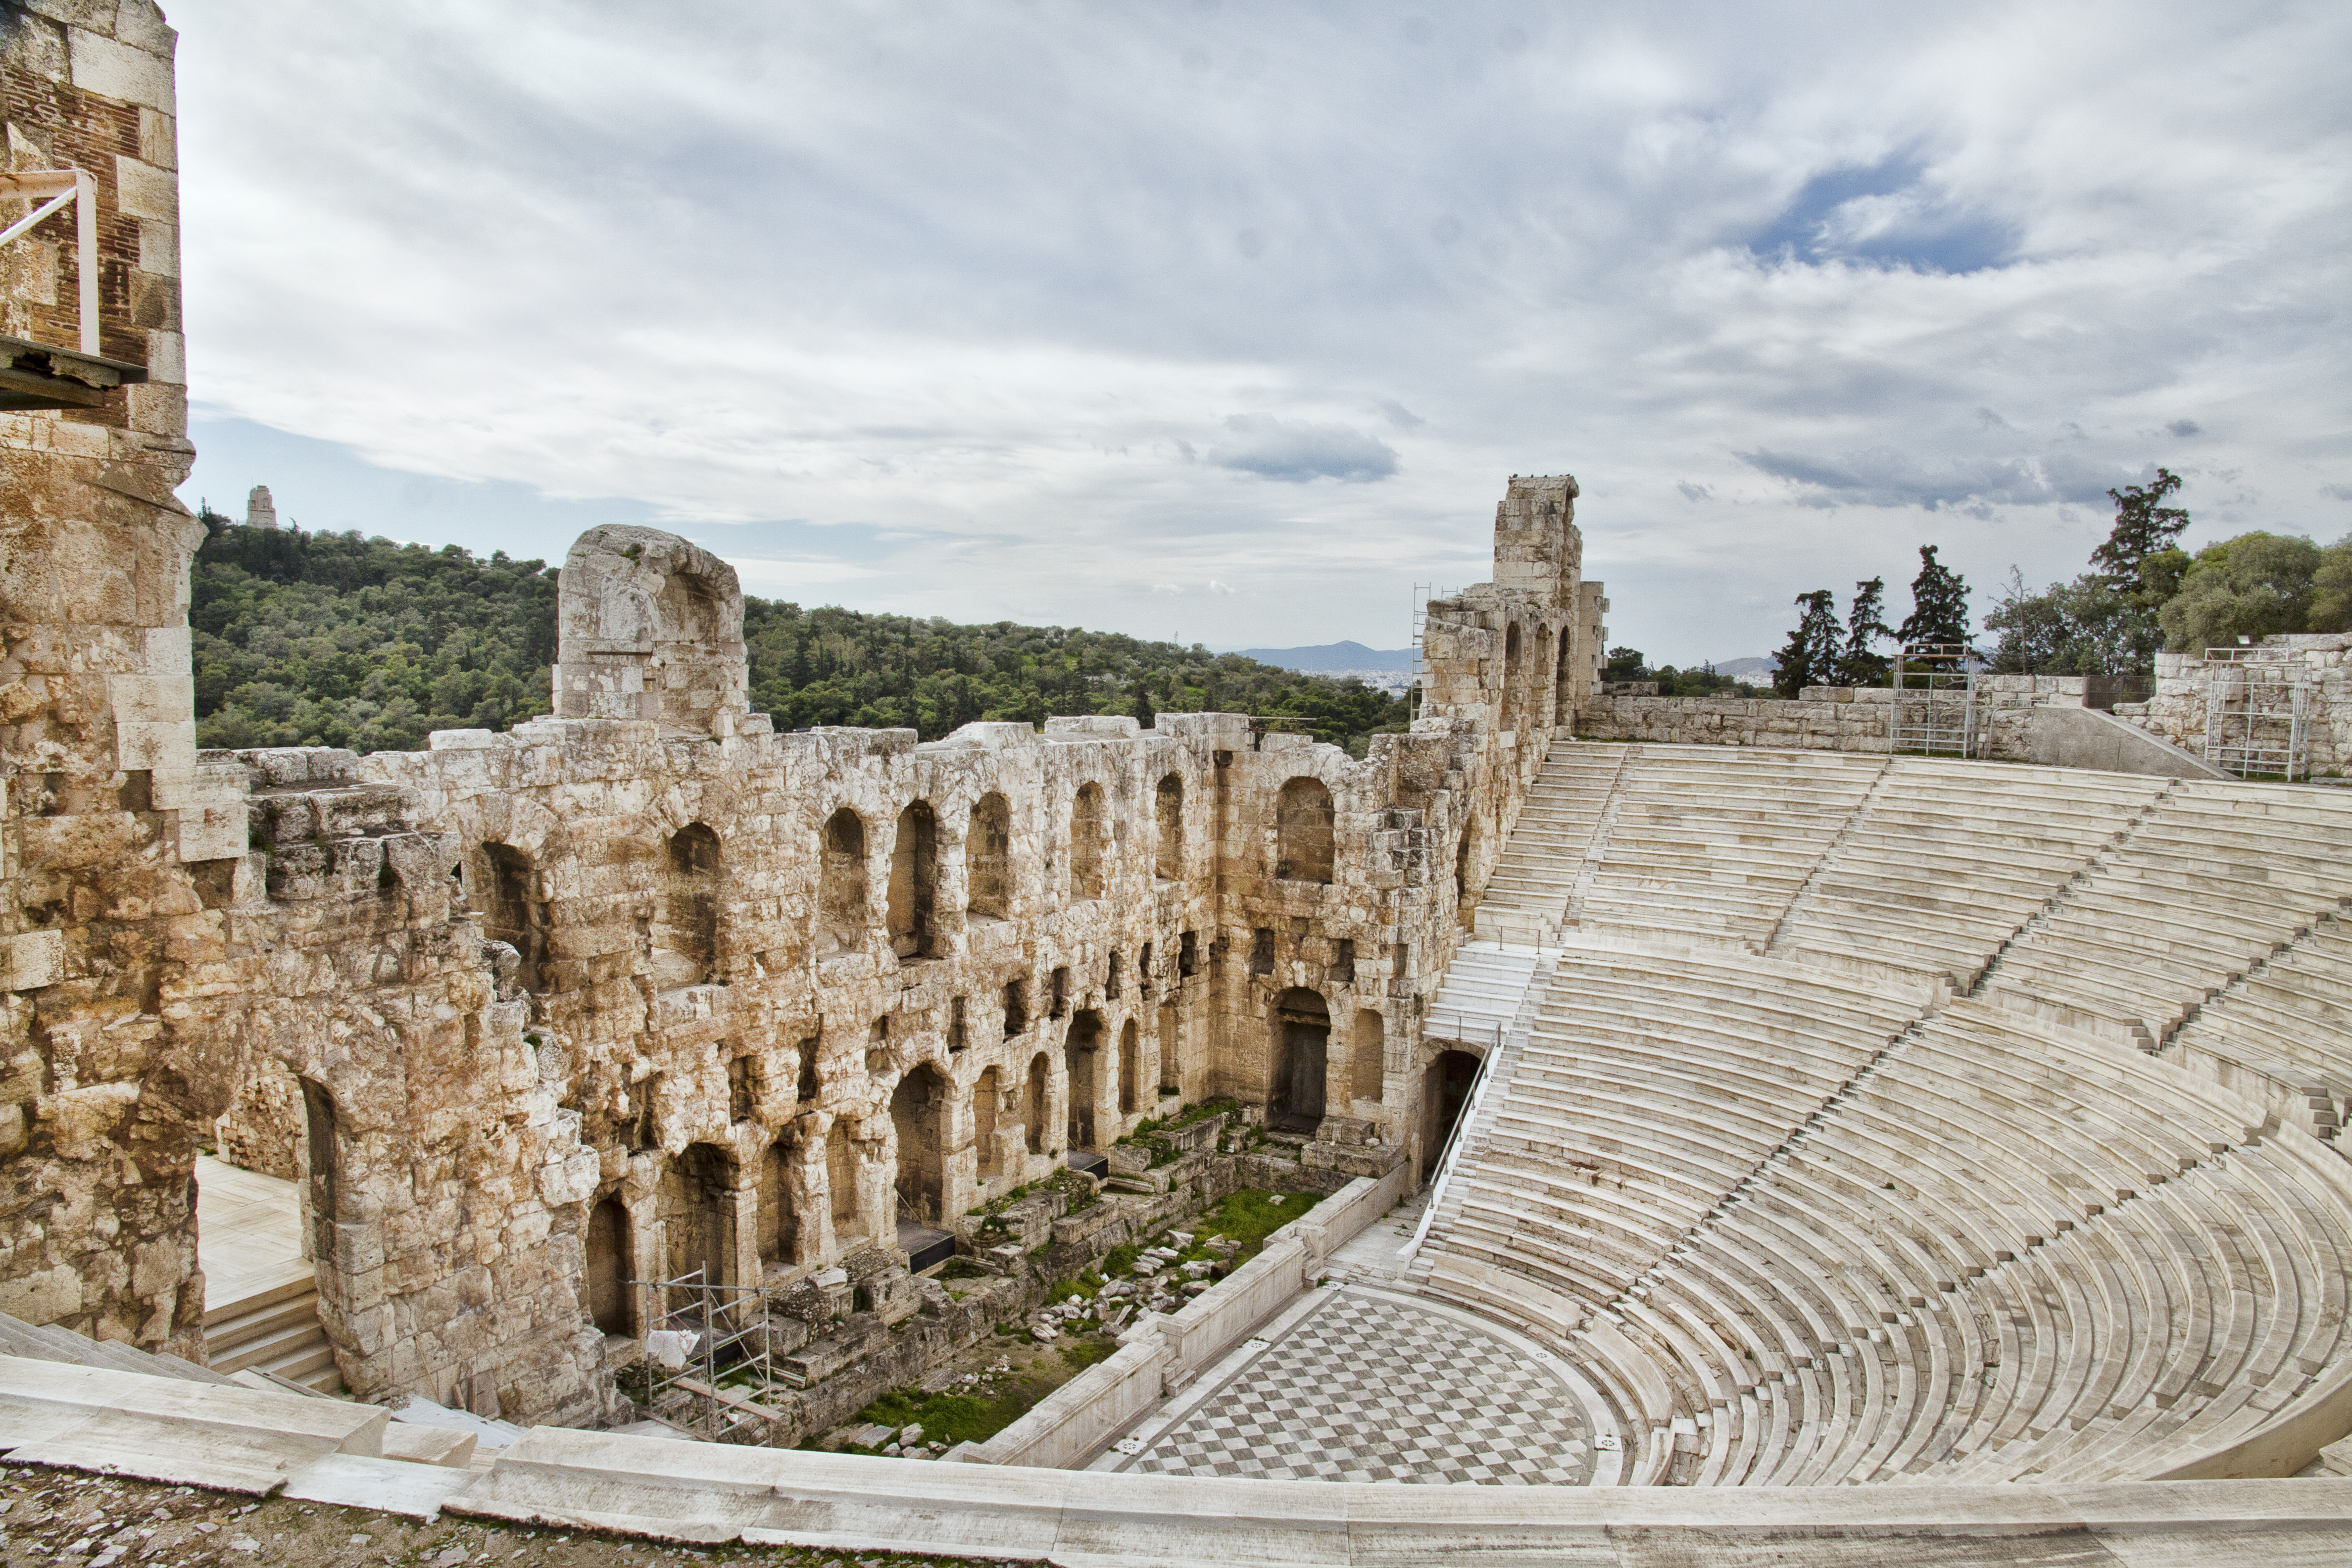 traditional greek theatre